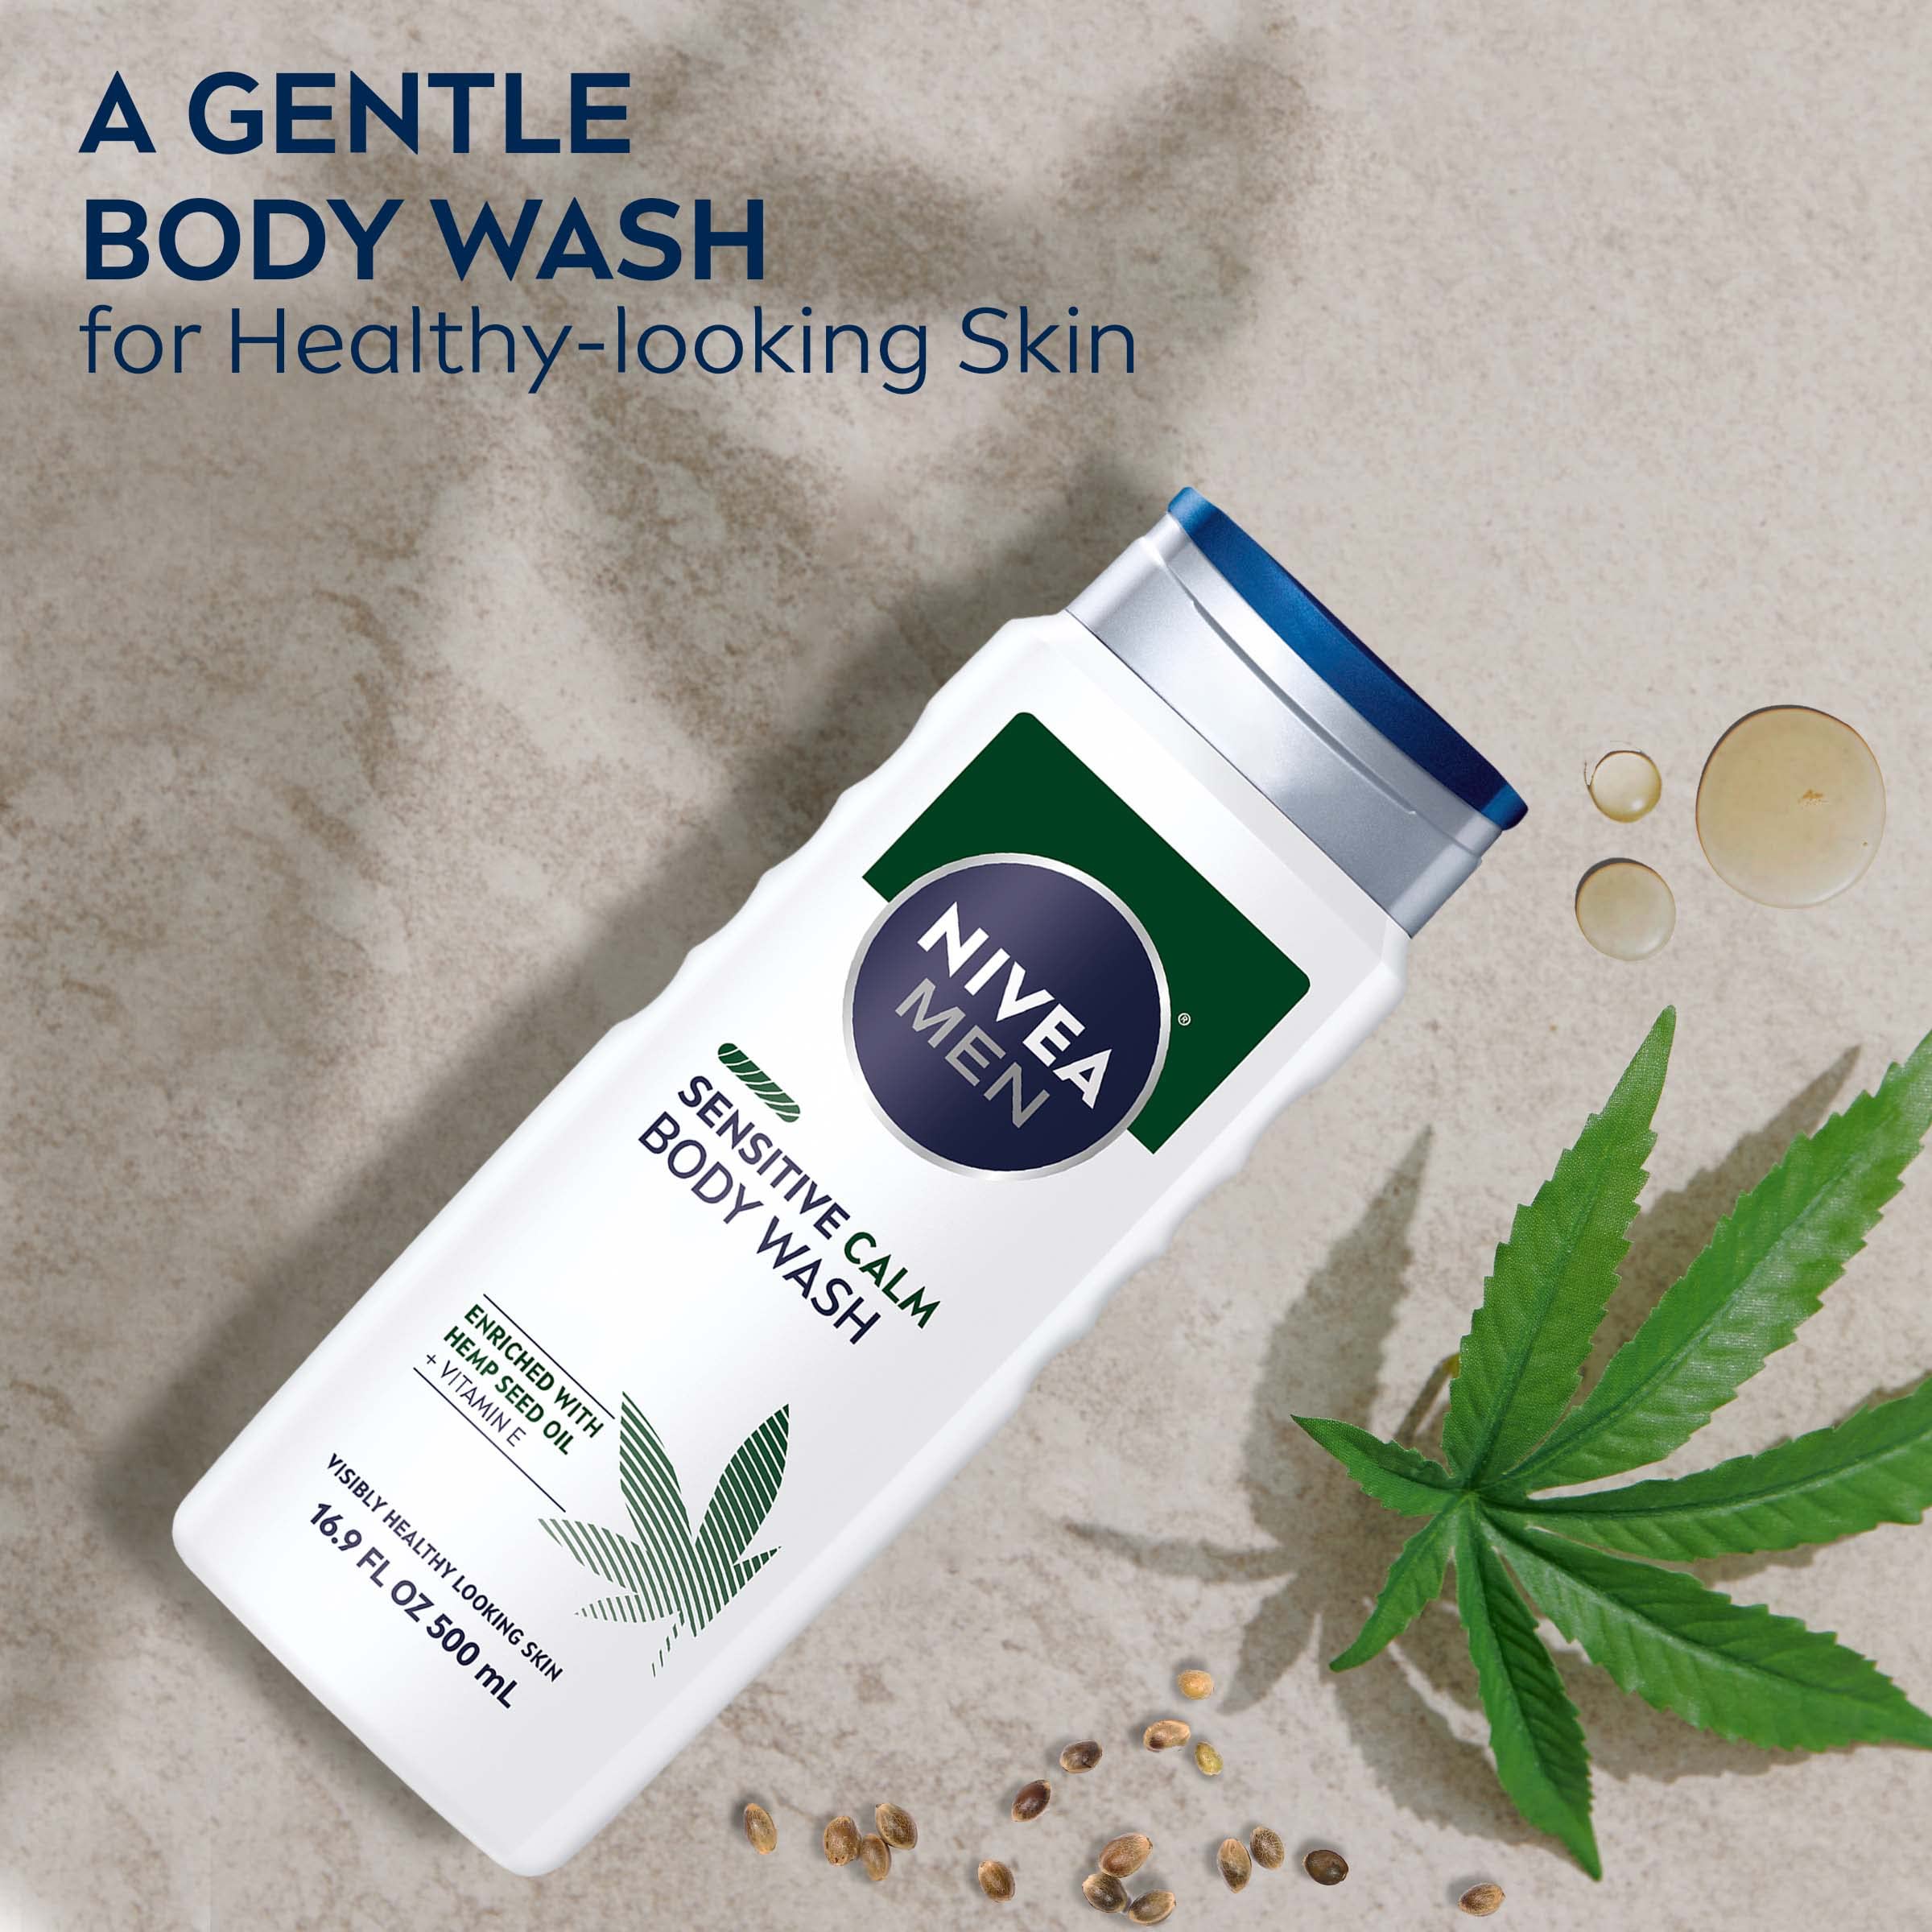 Nivea Men Sensitive Calm Body Wash with Vitamin E and Hemp Seed Oil, 3 Pack of 16.9 Fl Oz Bottles